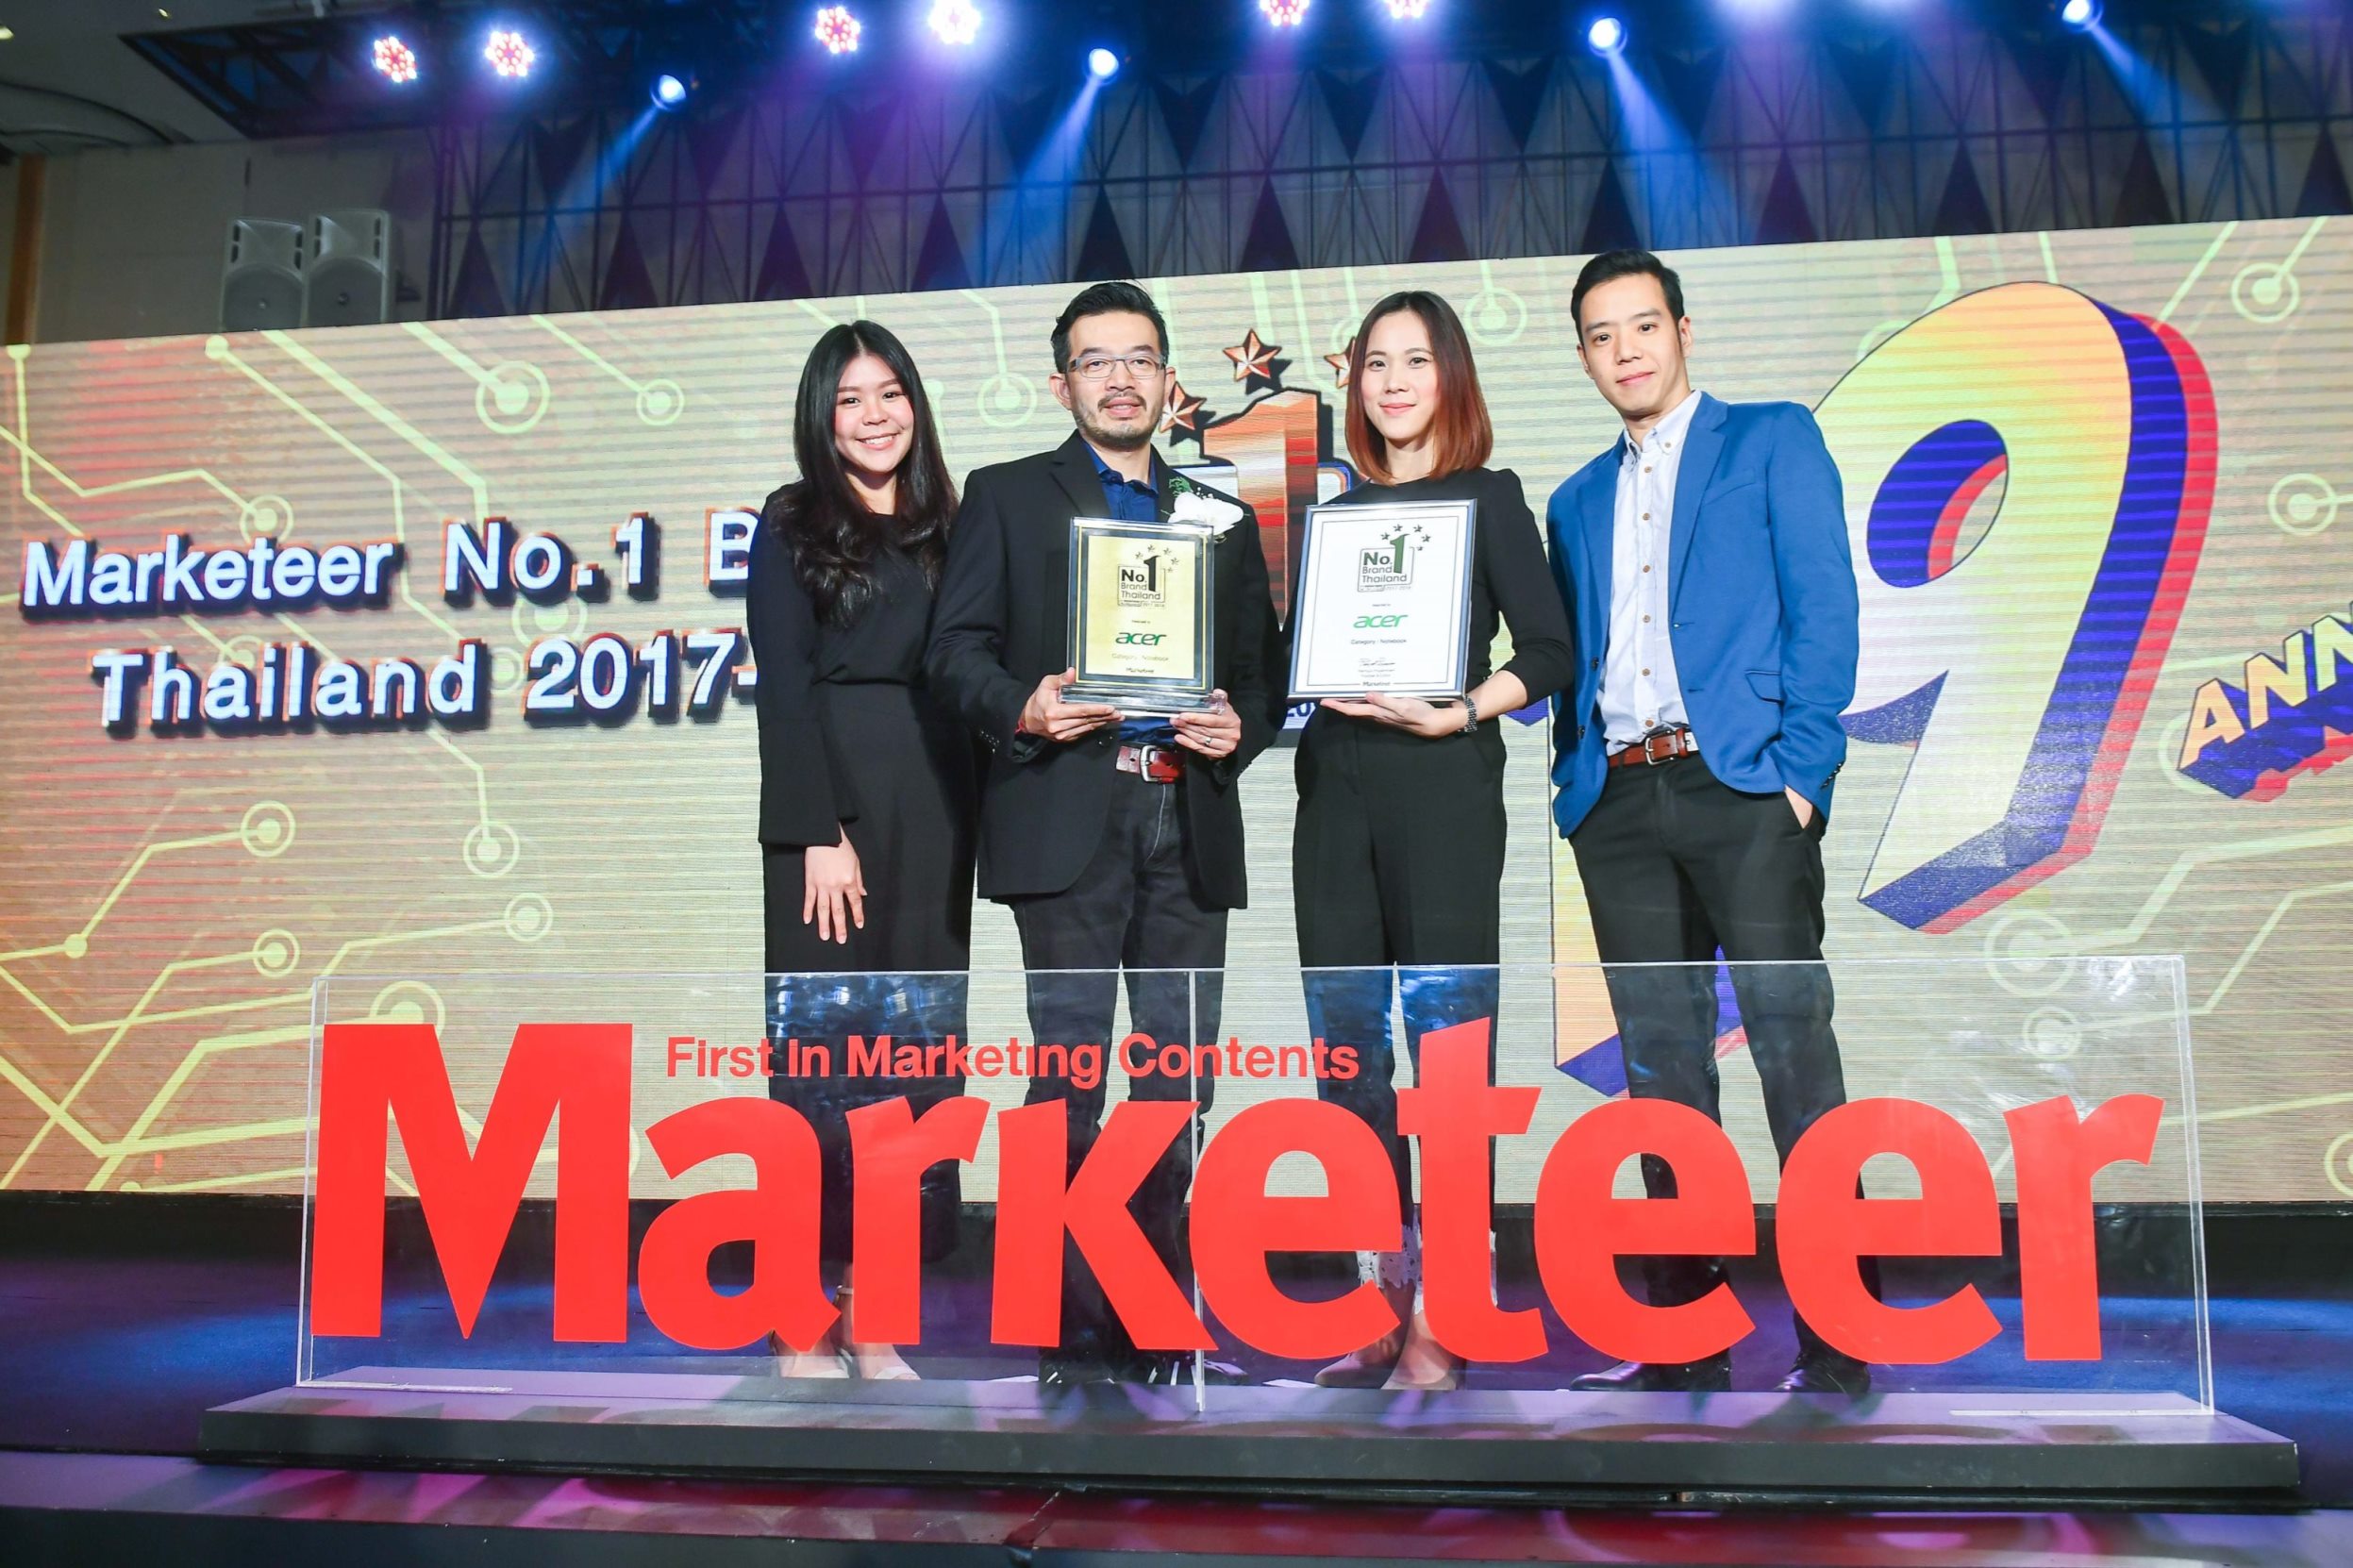 35 resize เอเซอร์คว้ารางวัล “No.1 Brand Thailand 2018” ประเภทโน้ตบุ๊คยอดนิยม ตอกย้ำความเป็นผู้นำต่อเนื่องเป็นปีที่ 7